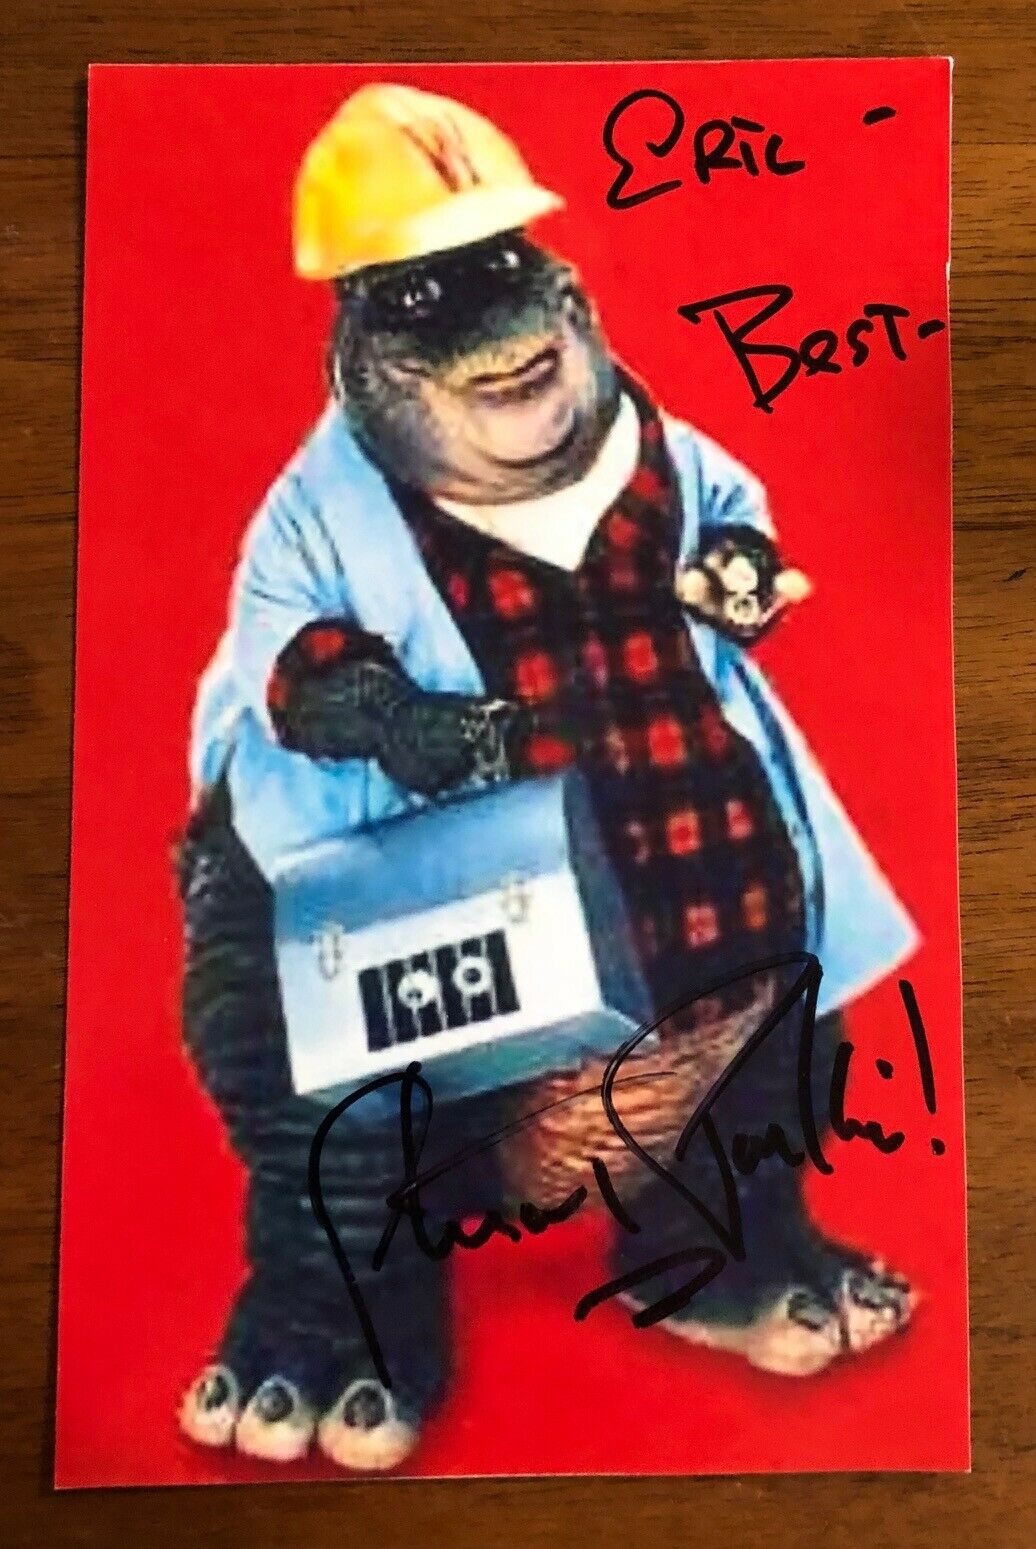 Stuart Pankin Signed Autographed Auto Photo Card 4"x6" Dinosaurs